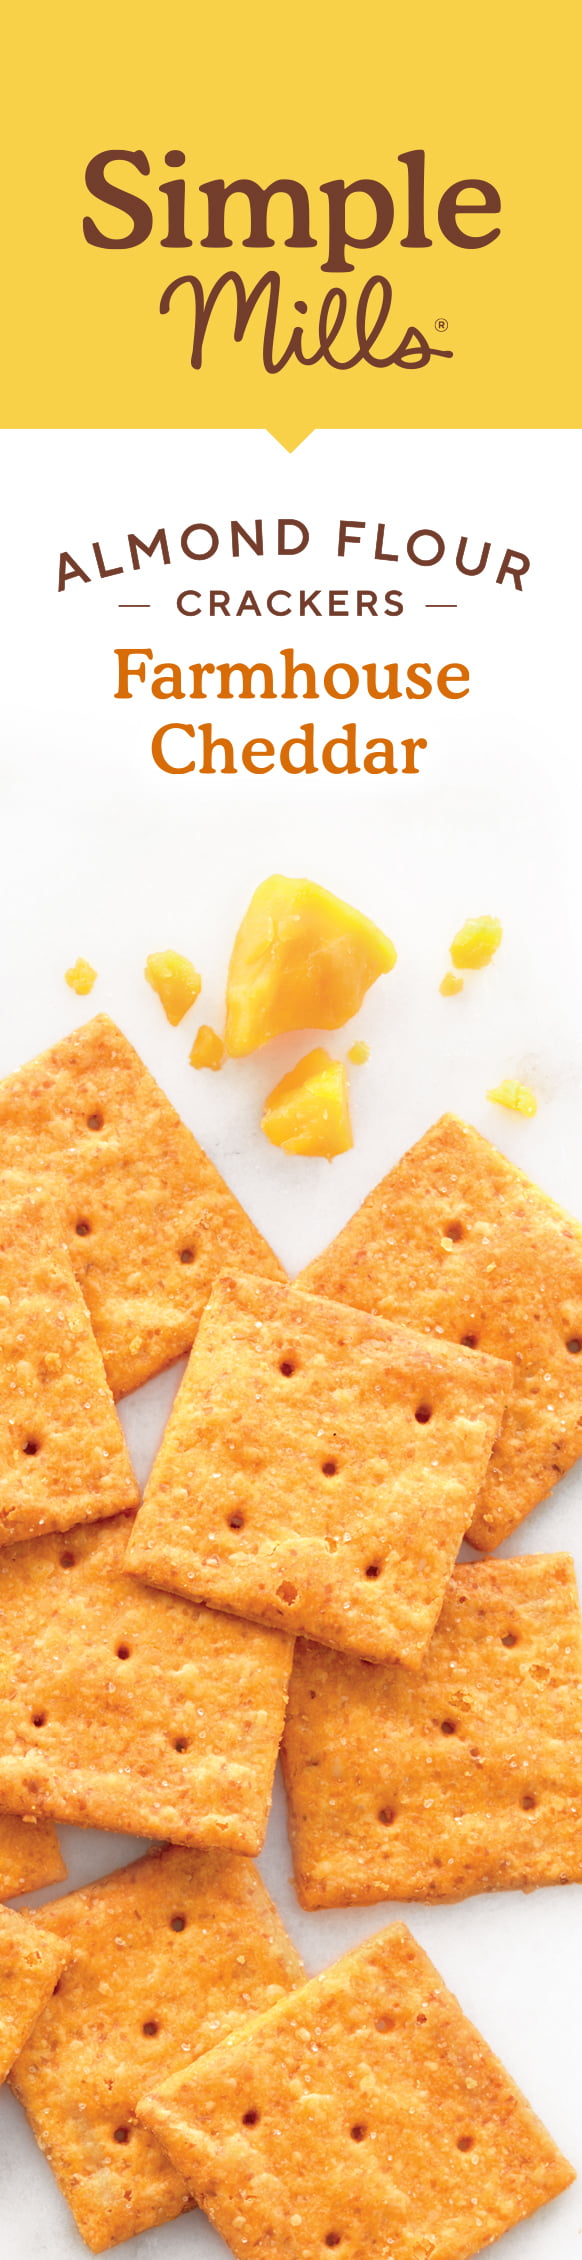 Simple Mills Crackers, Farmhouse Cheddar, Almond Flour, 4.25 oz. -  Walmart.com